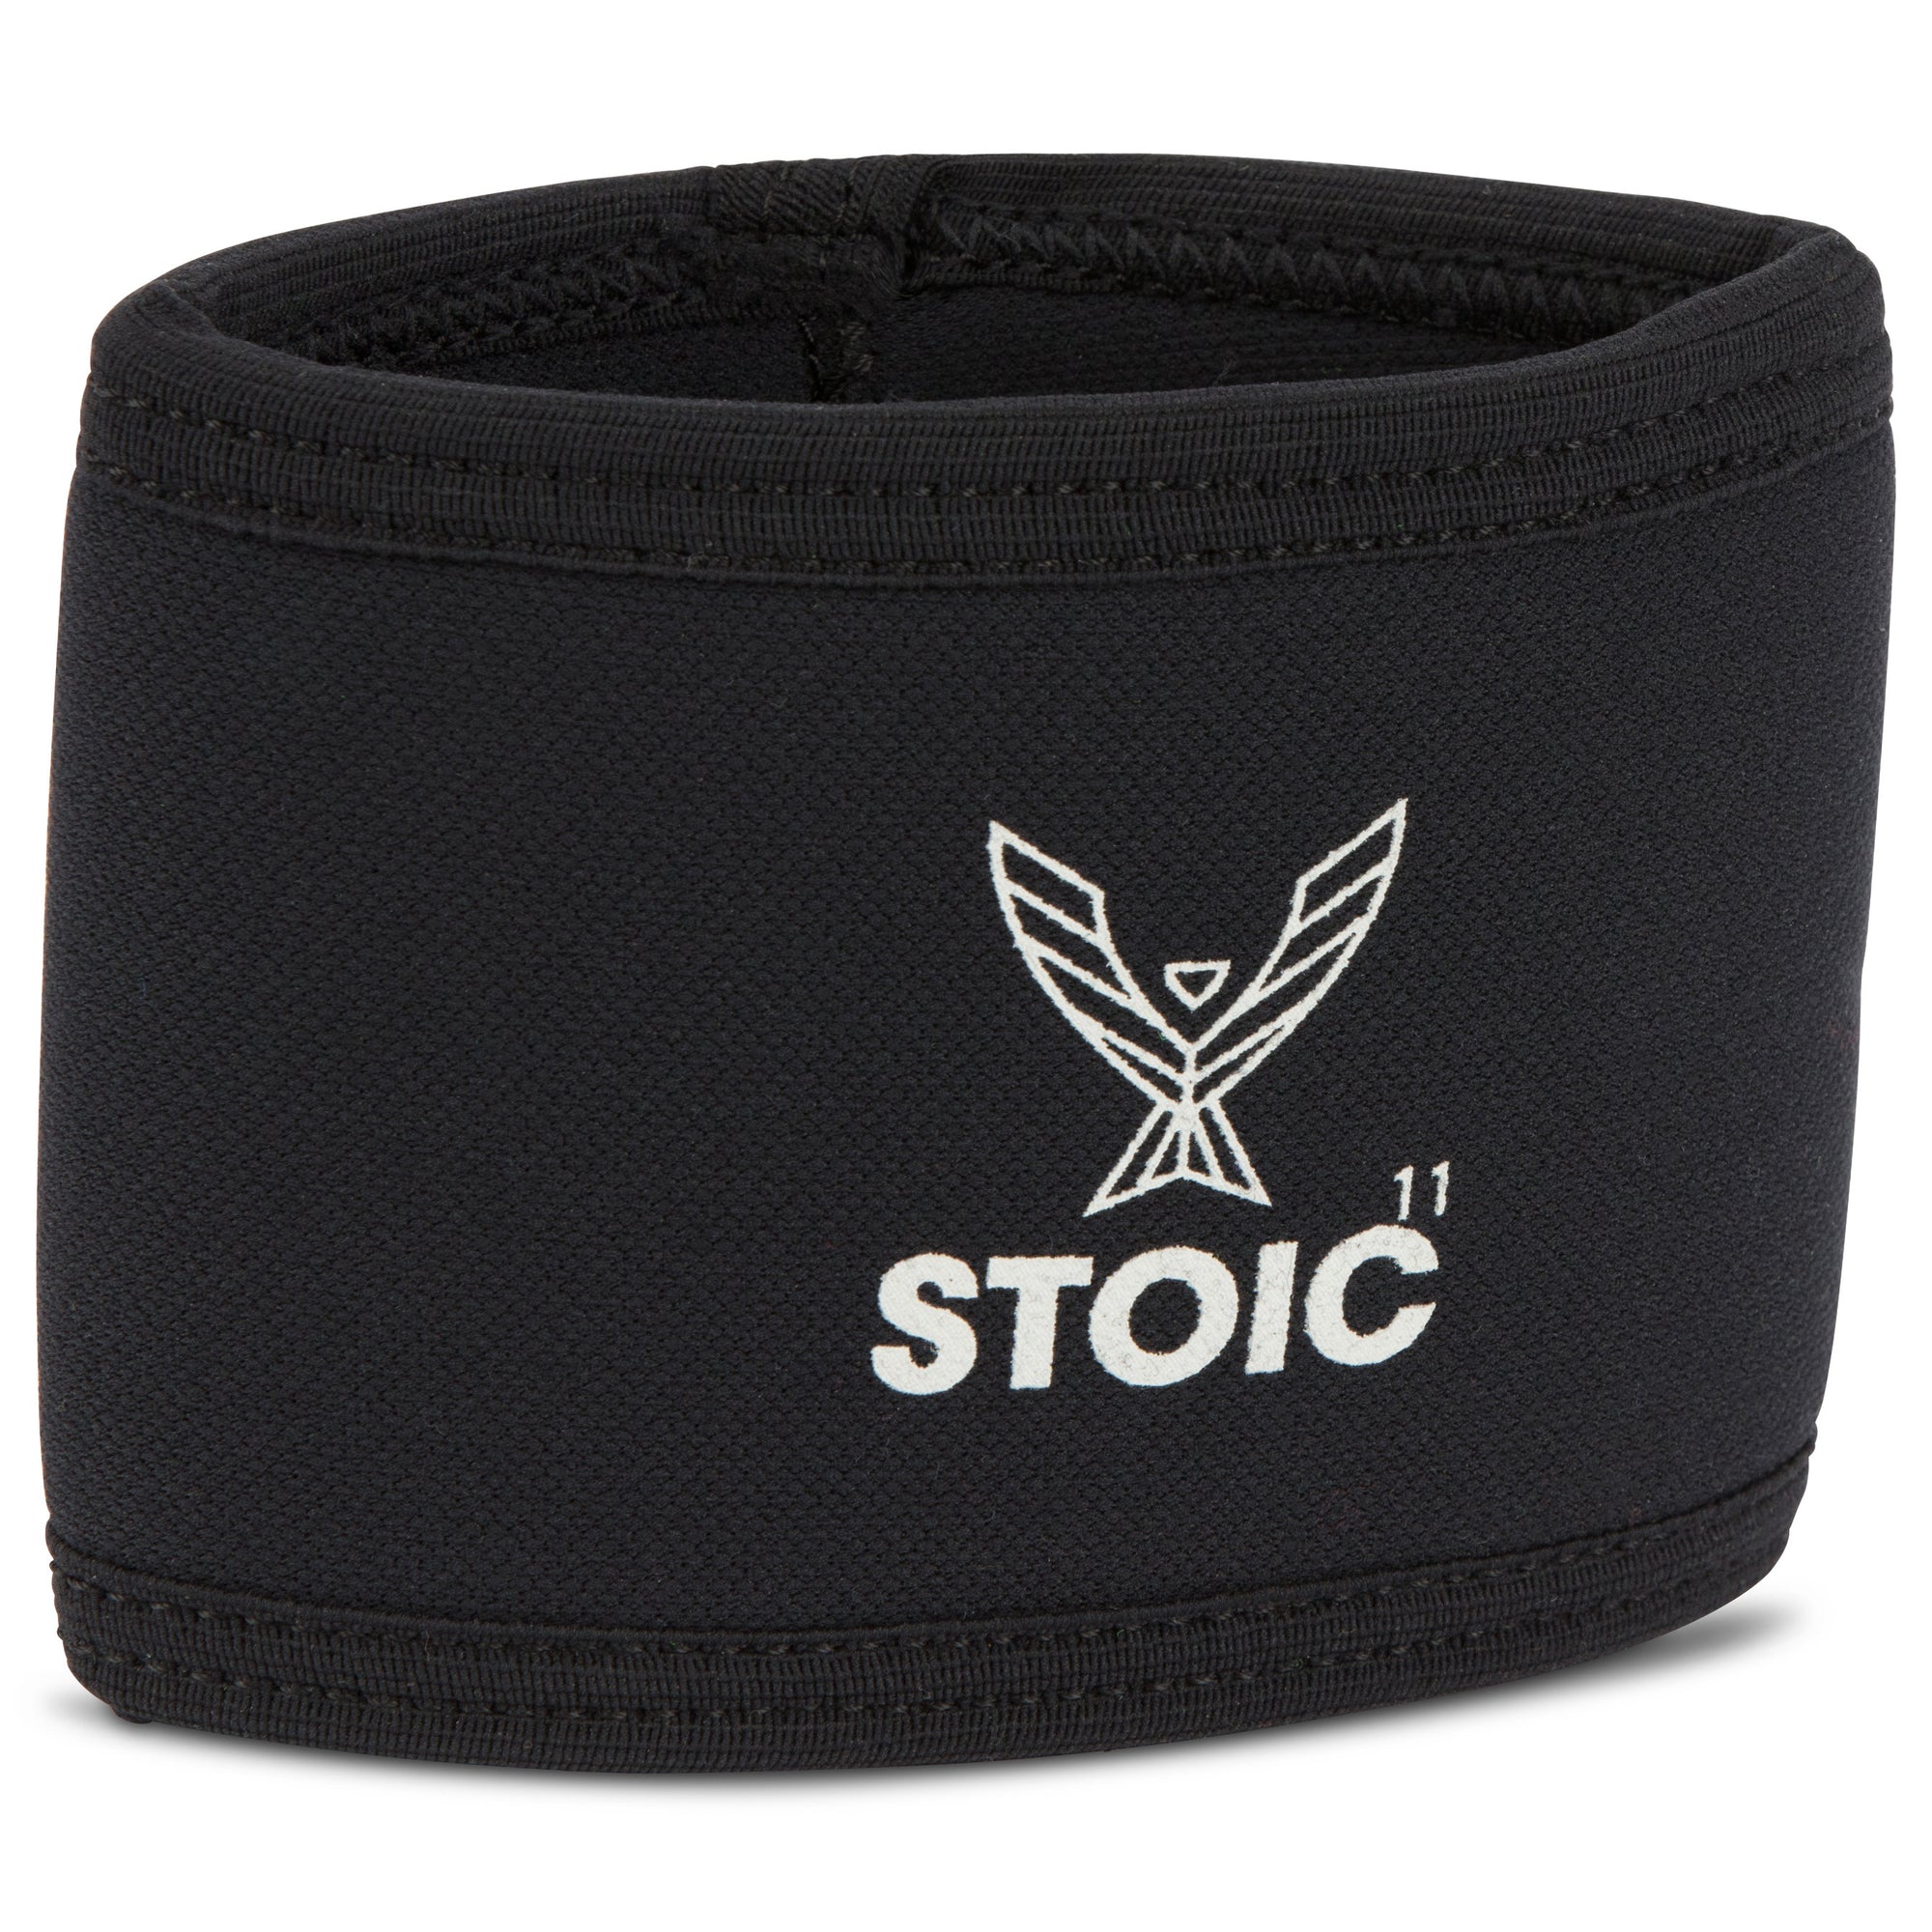 Stoic Compression Sleeve Cuff